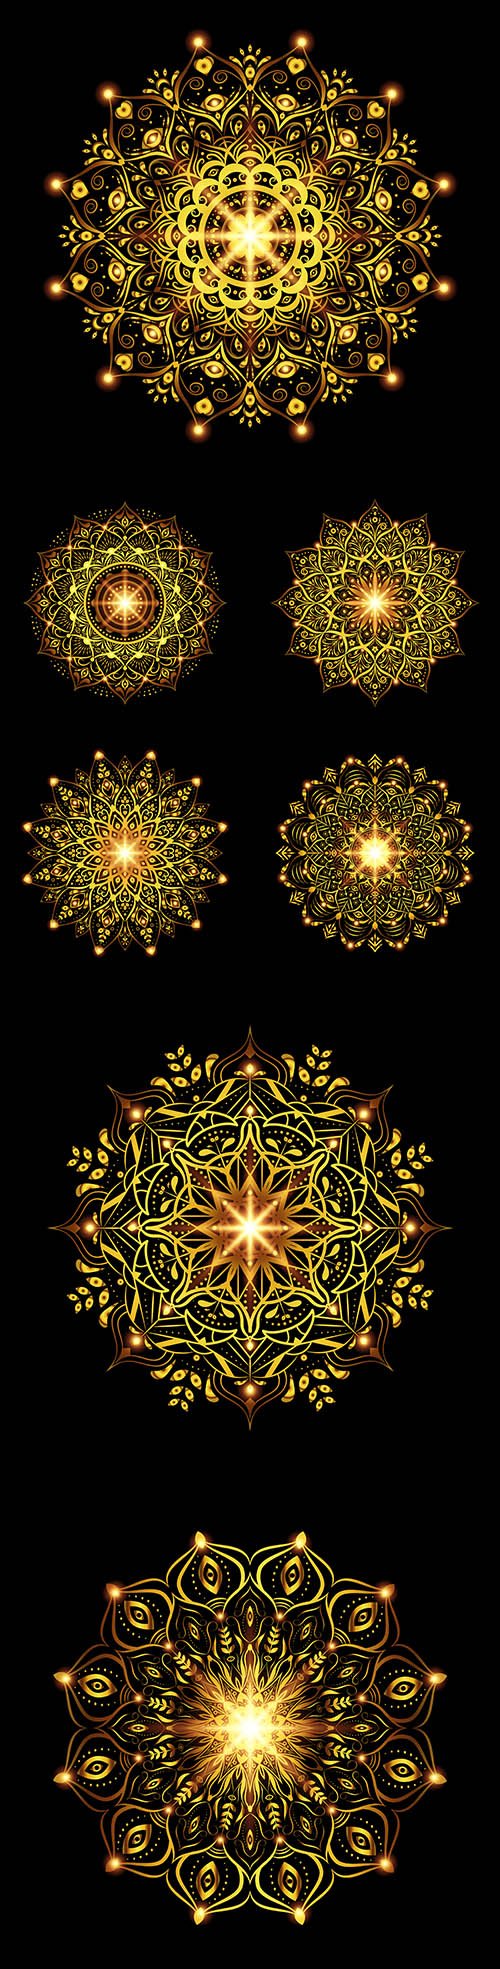 Mandala decorative gold ornament design